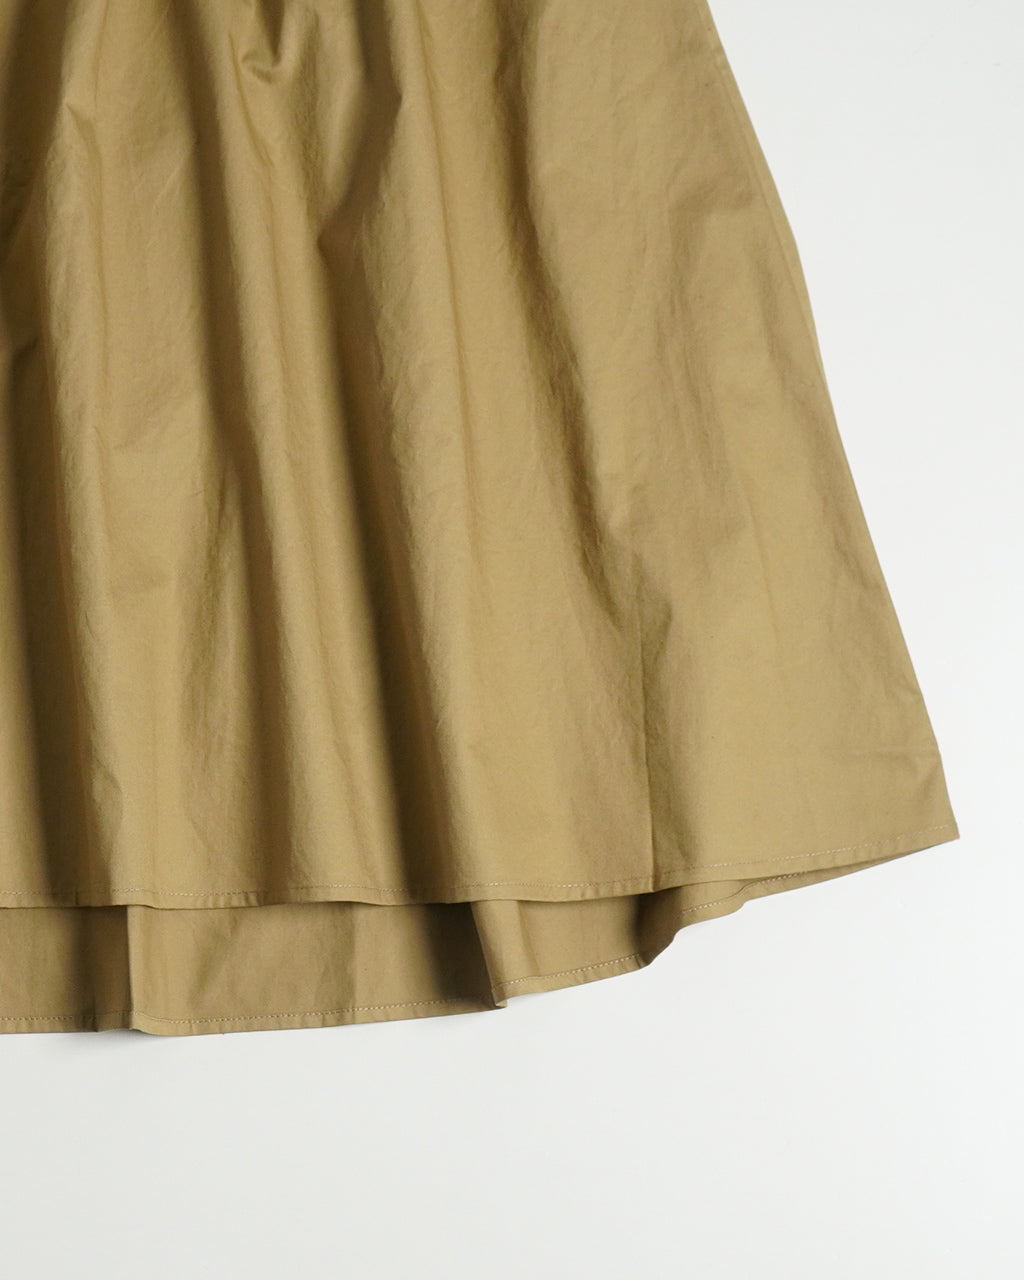 Commencement コメンスメント スカート Skirt フレア イージースカート  C-218【送料無料】